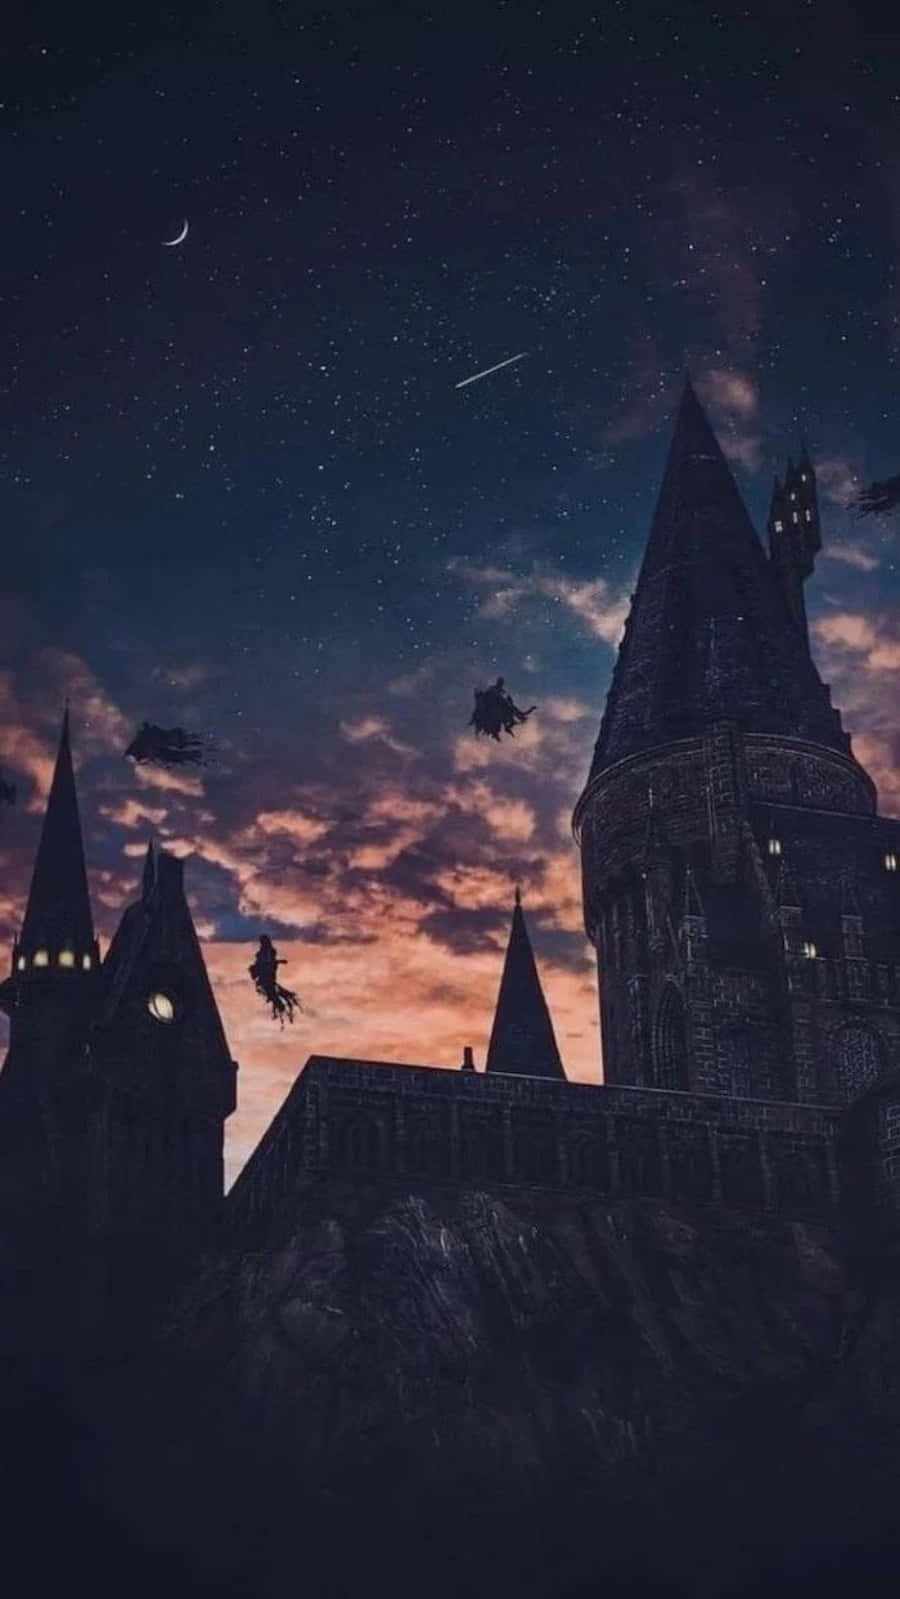 Imagination takes you to Hogwarts